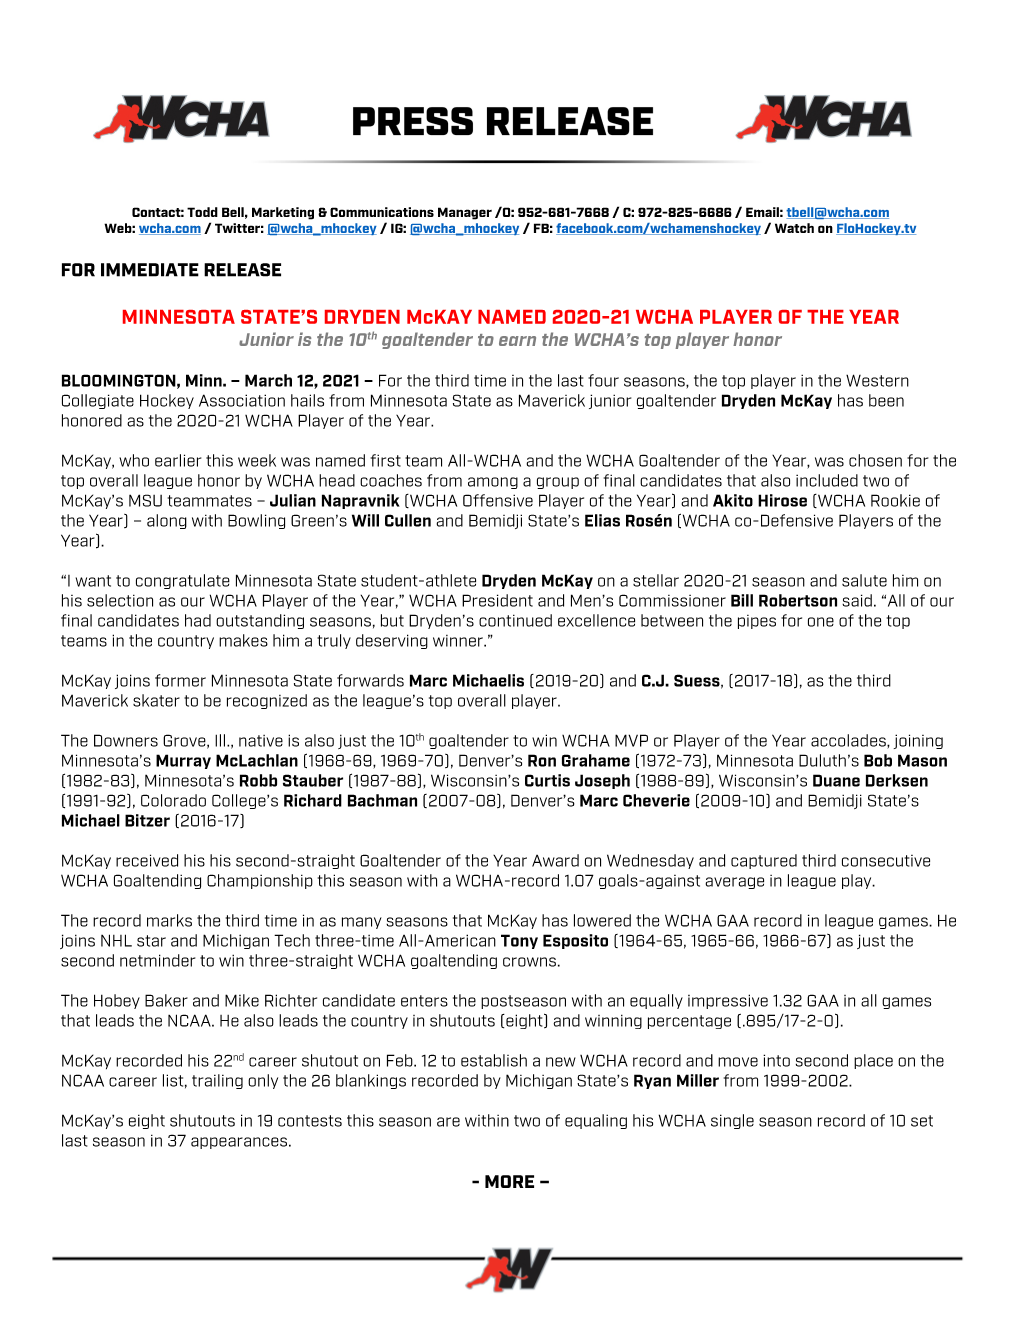 MINNESOTA STATE's DRYDEN Mckay NAMED 2020-21 WCHA